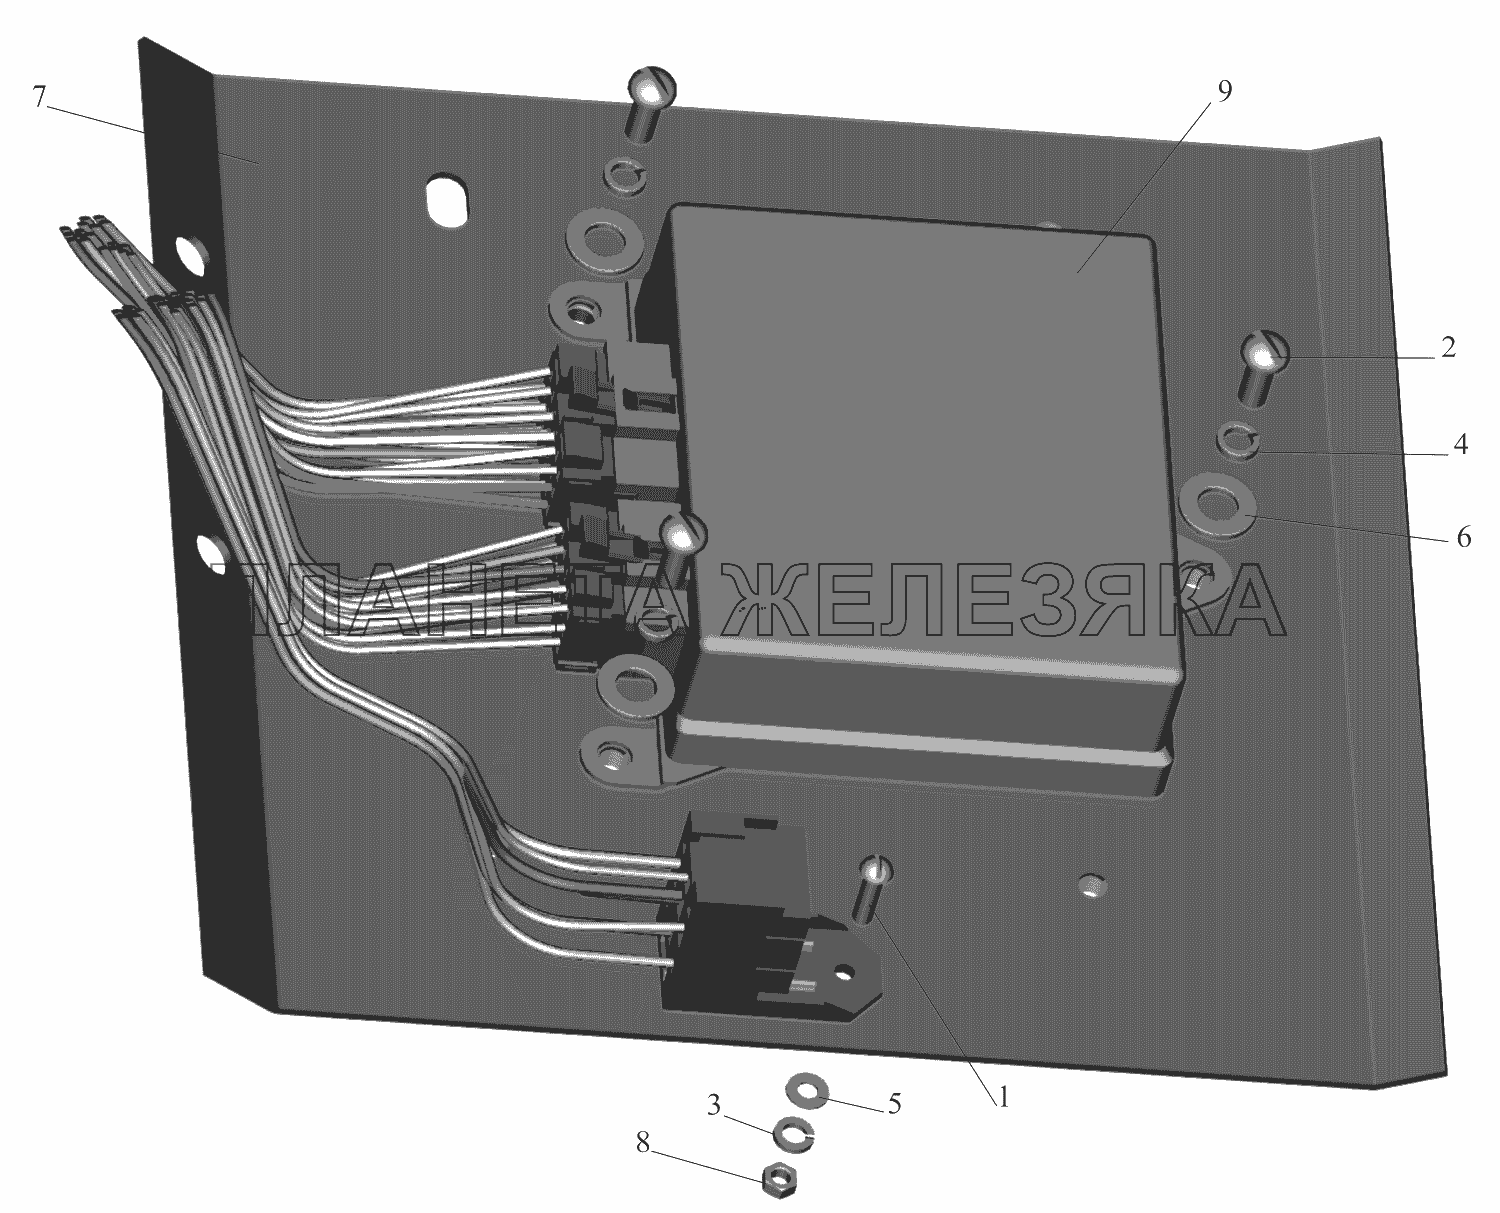 Установка электронного блока АБС на автомобиле без прицепа и ограничения скорости МАЗ-551669